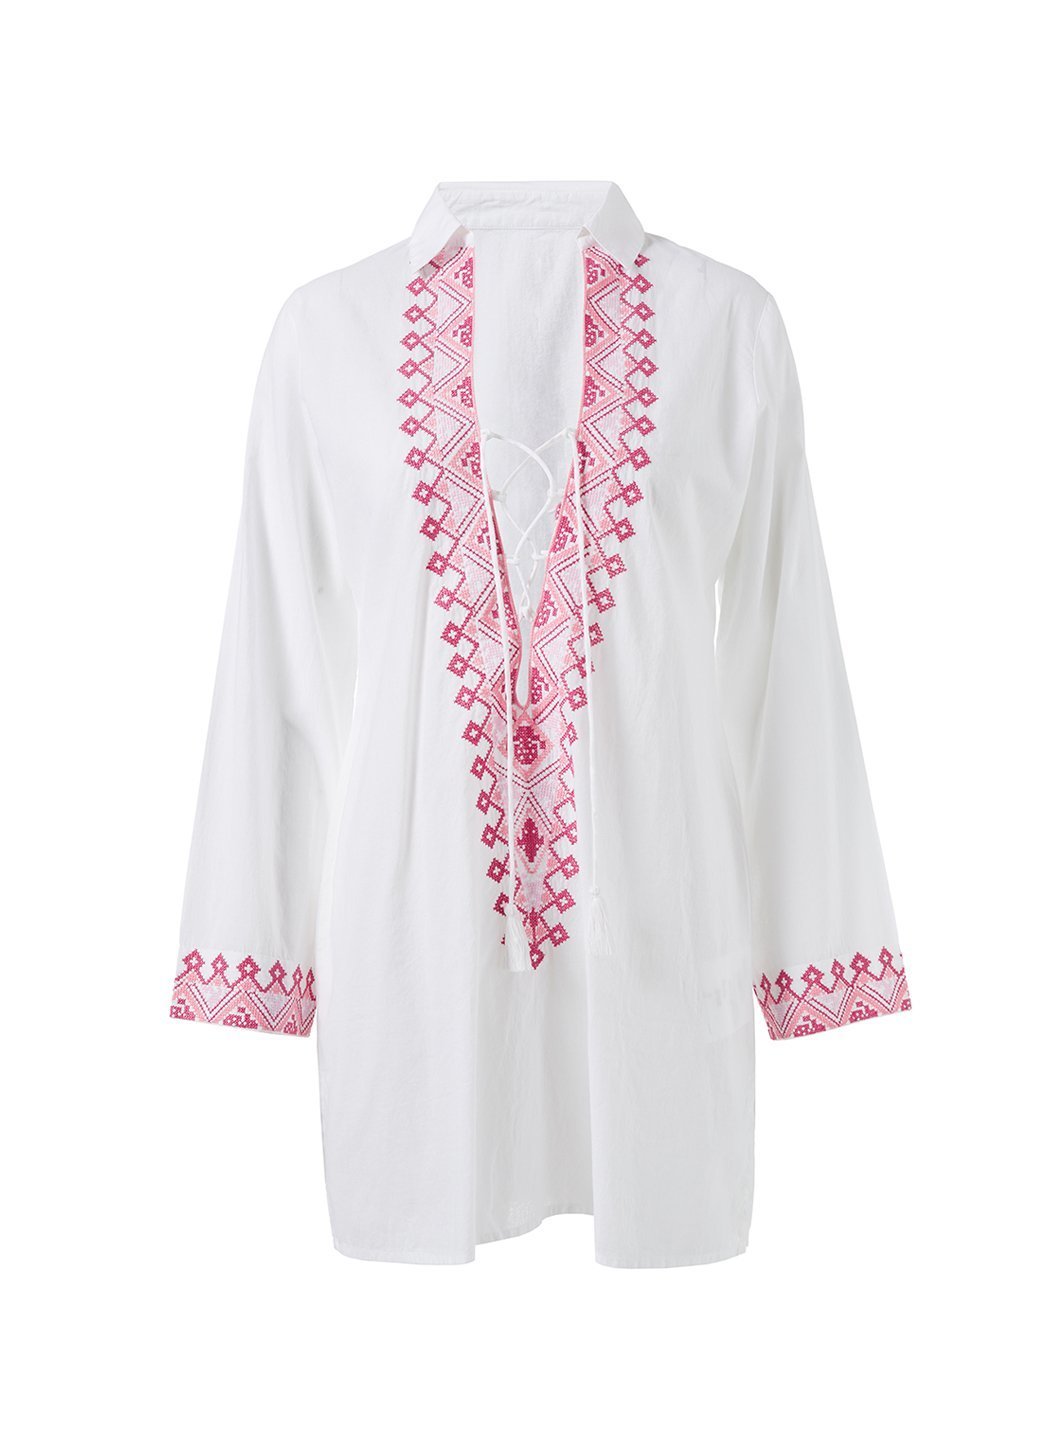 dora white hot pink embroidered lace up short kaftan